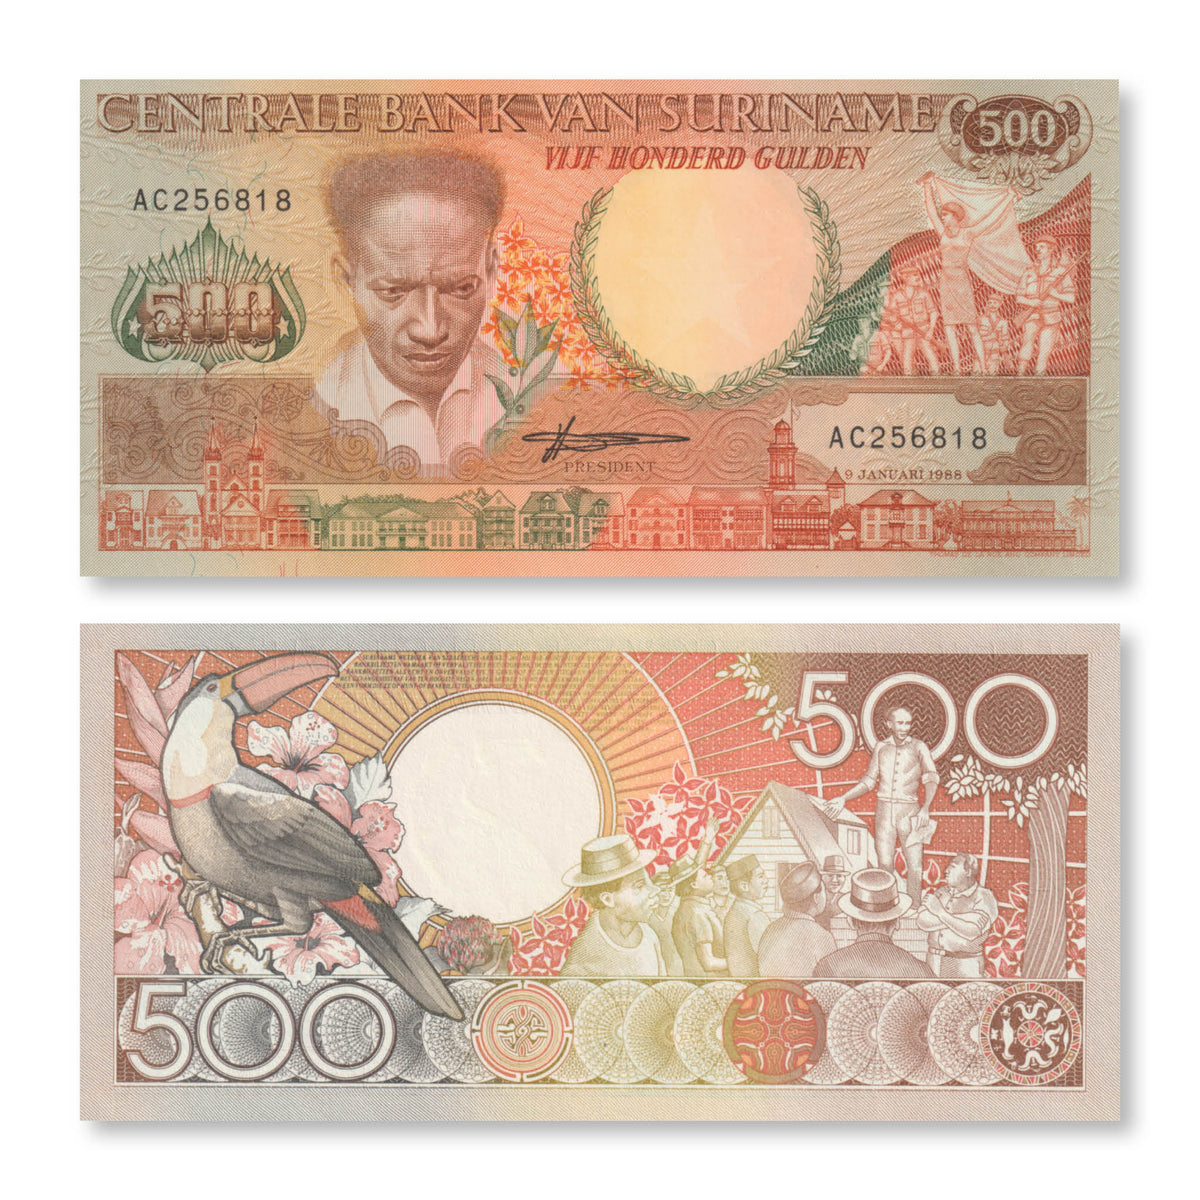 Suriname 500 Gulden, 1988, B521b, P135b, UNC - Robert's World Money - World Banknotes